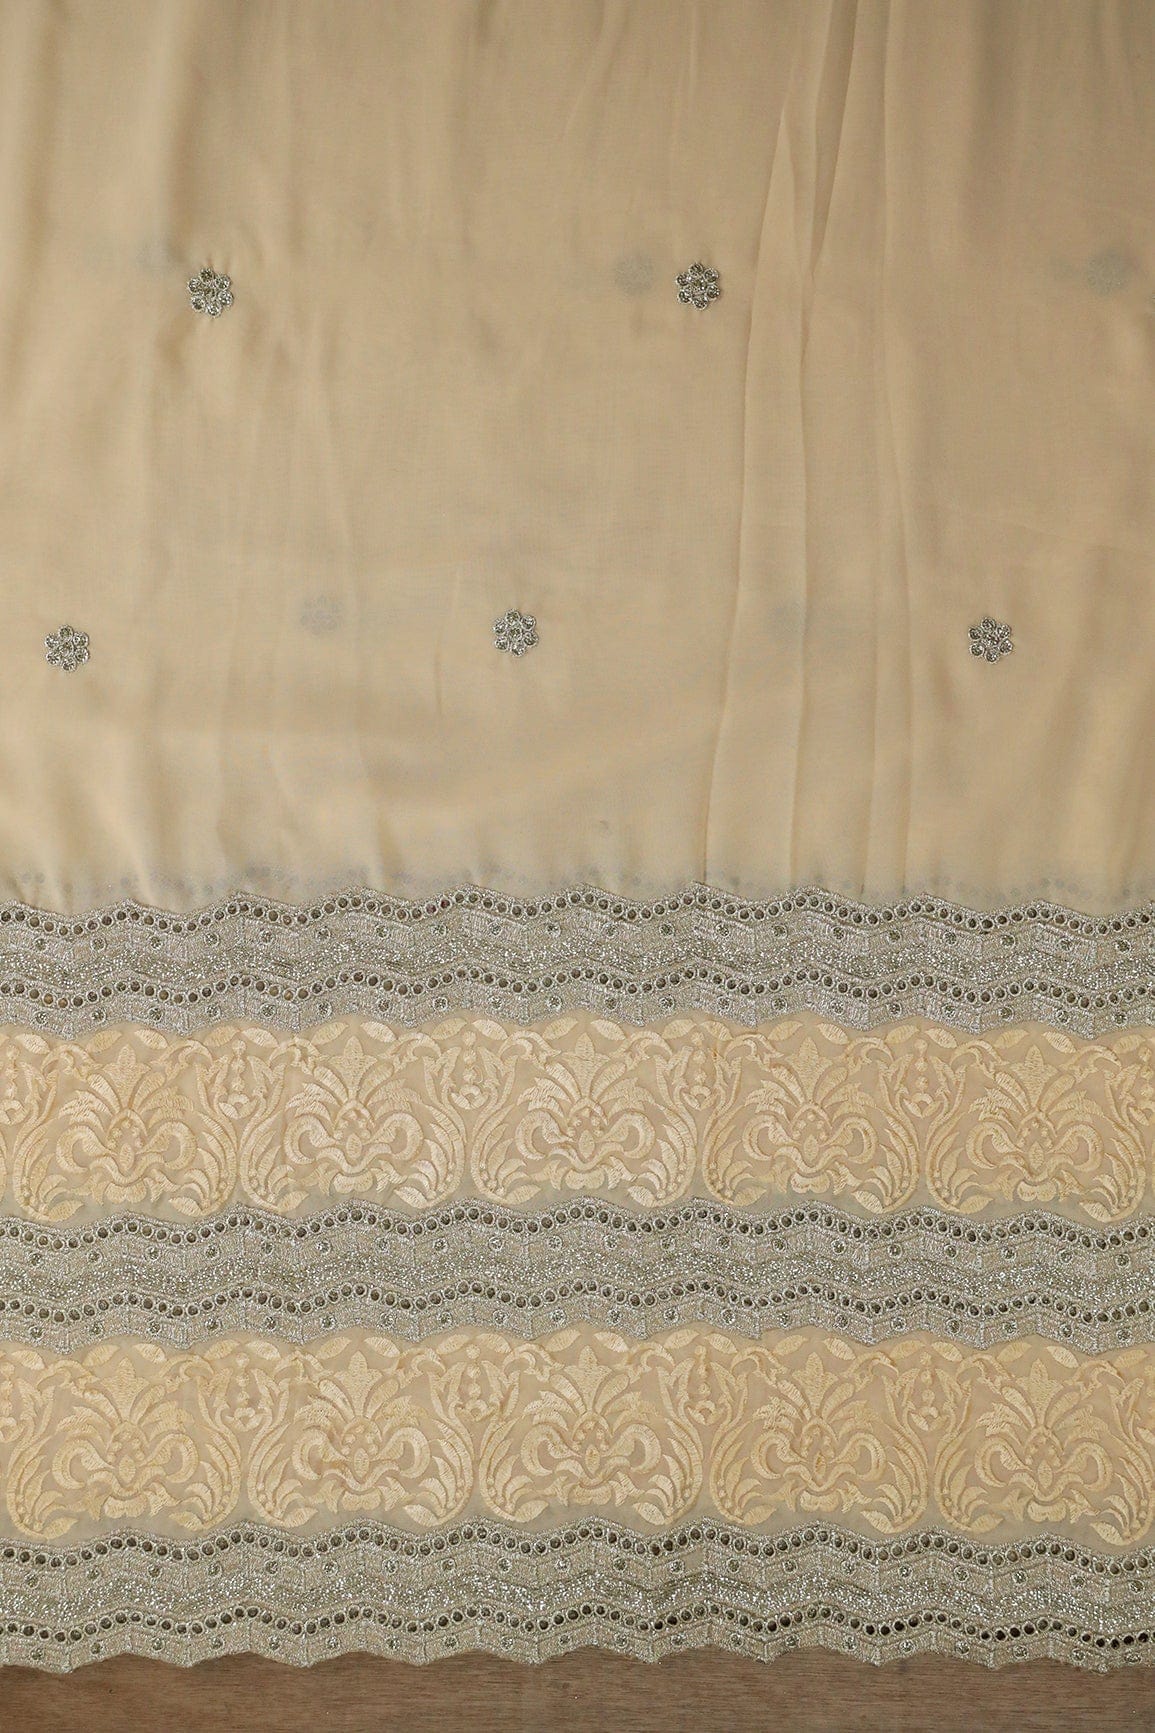 doeraa Embroidery Fabrics Big Width''56'' Cream Thread With Zari Ethnic Embroidery Work On Cream Georgette Fabric With Border